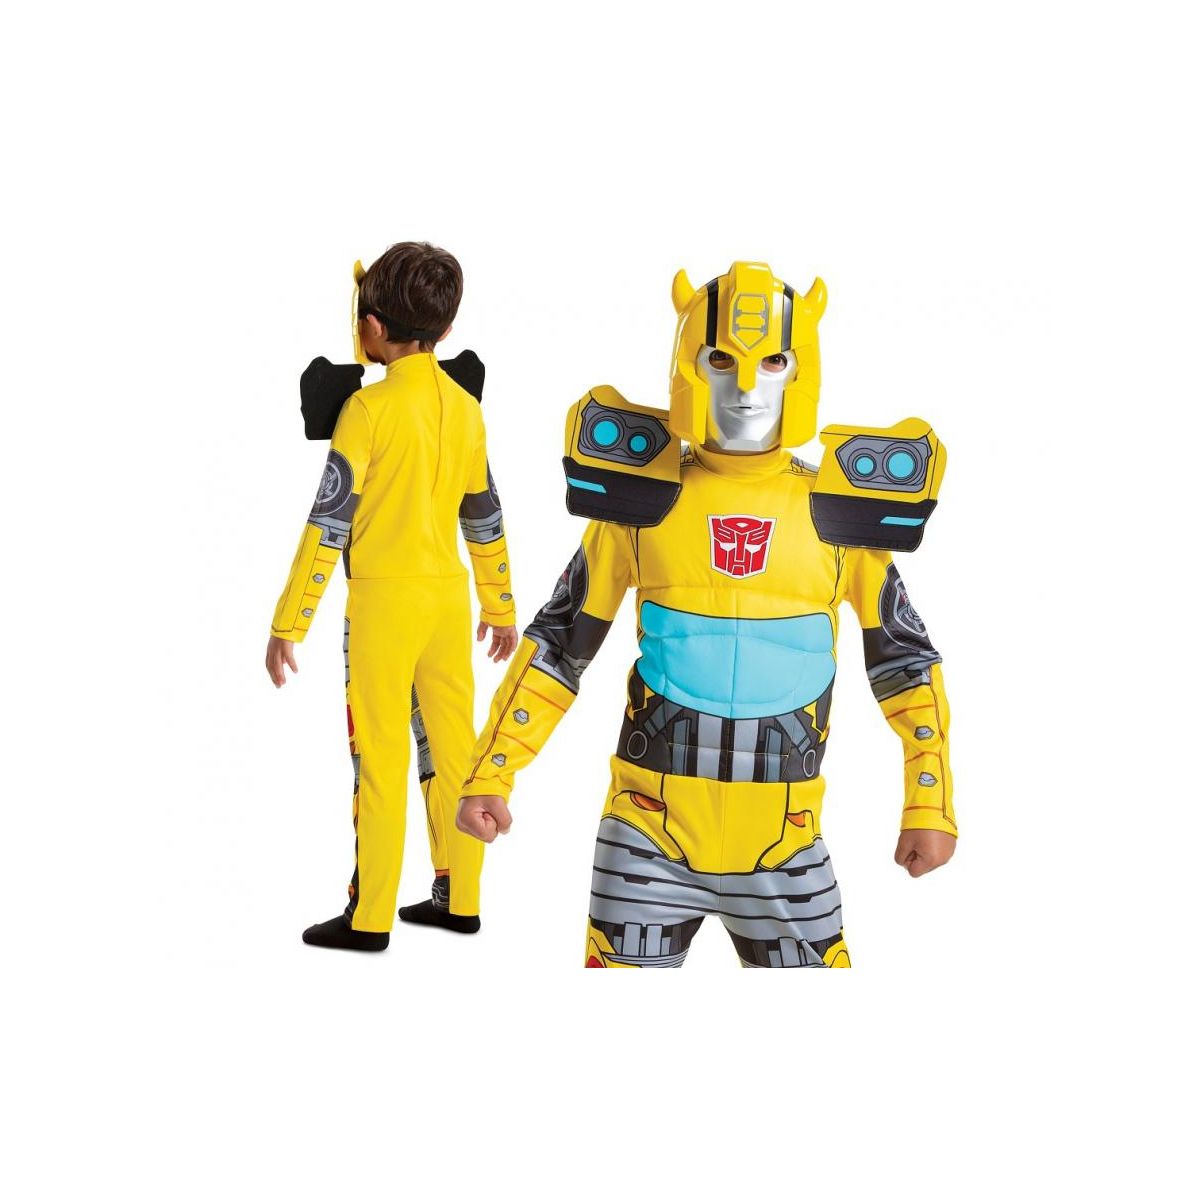 Kostium Bumblebee Fancy - Transformers (licencja), rozm. S (4-6 lat) Godan (116319L)